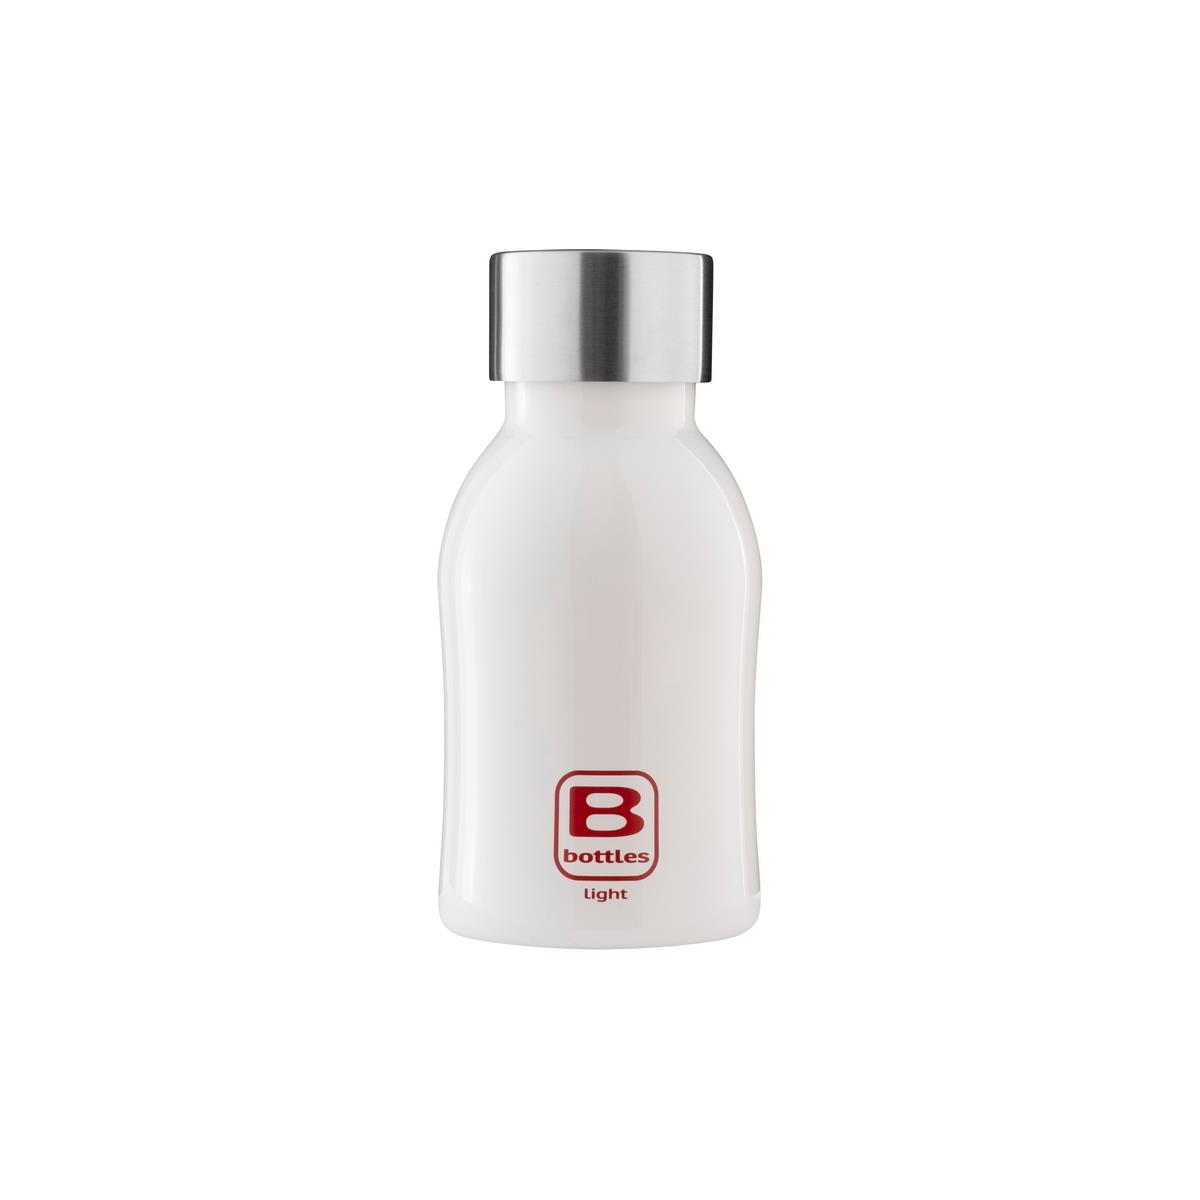 photo B Bottles Light - Bianco Bright - 350 ml - Bottiglia in acciaio inox 18/10 ultra leggera e compatta